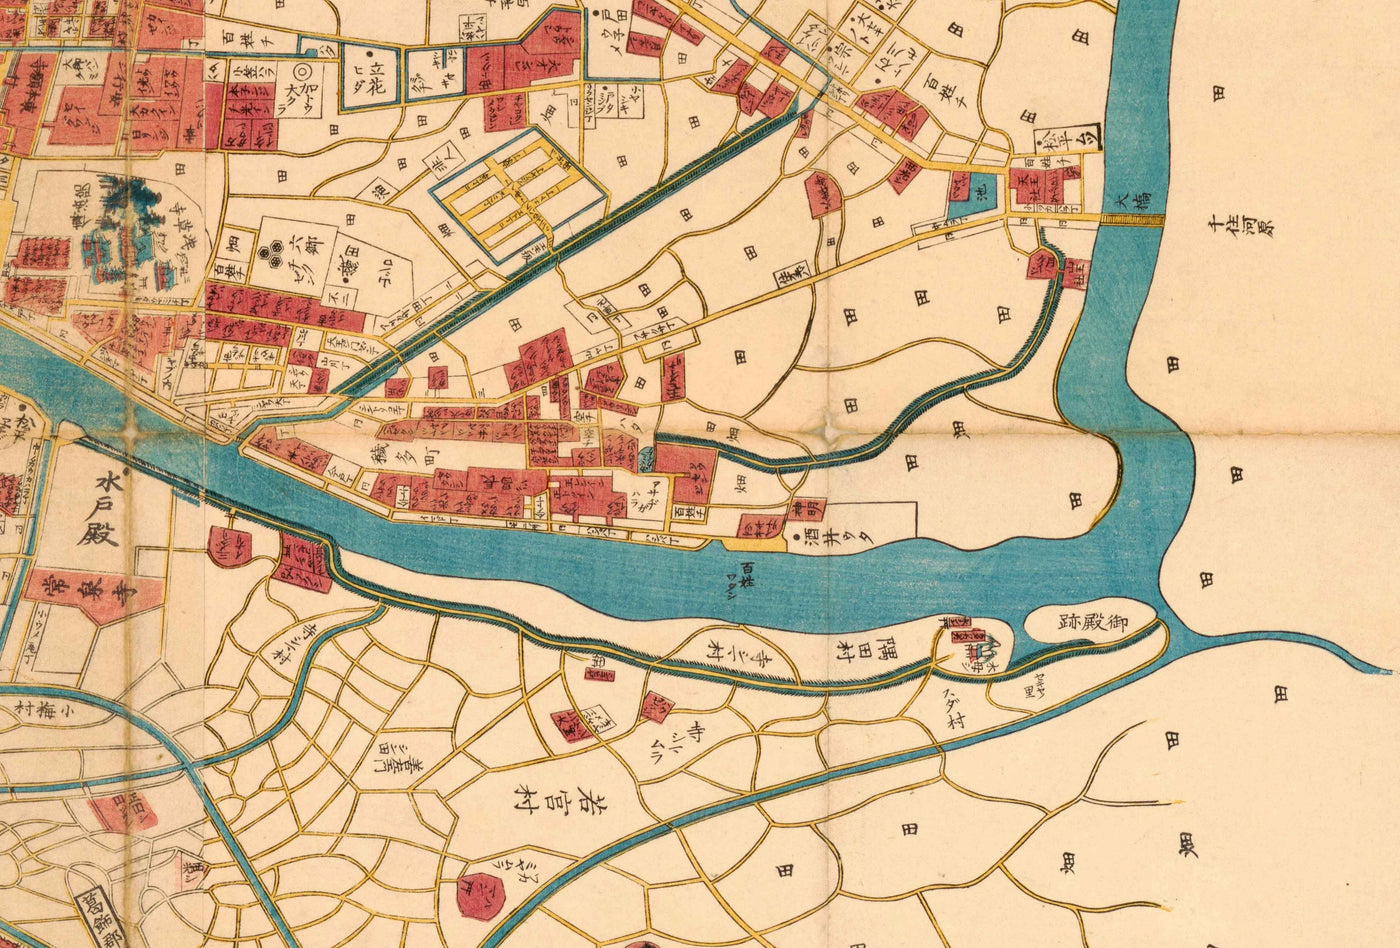 Old Map of Tokyo in 1860 by Mohe Subaraya - Yokohama, Kawasaki, Chiba, Minato, Shinjuku